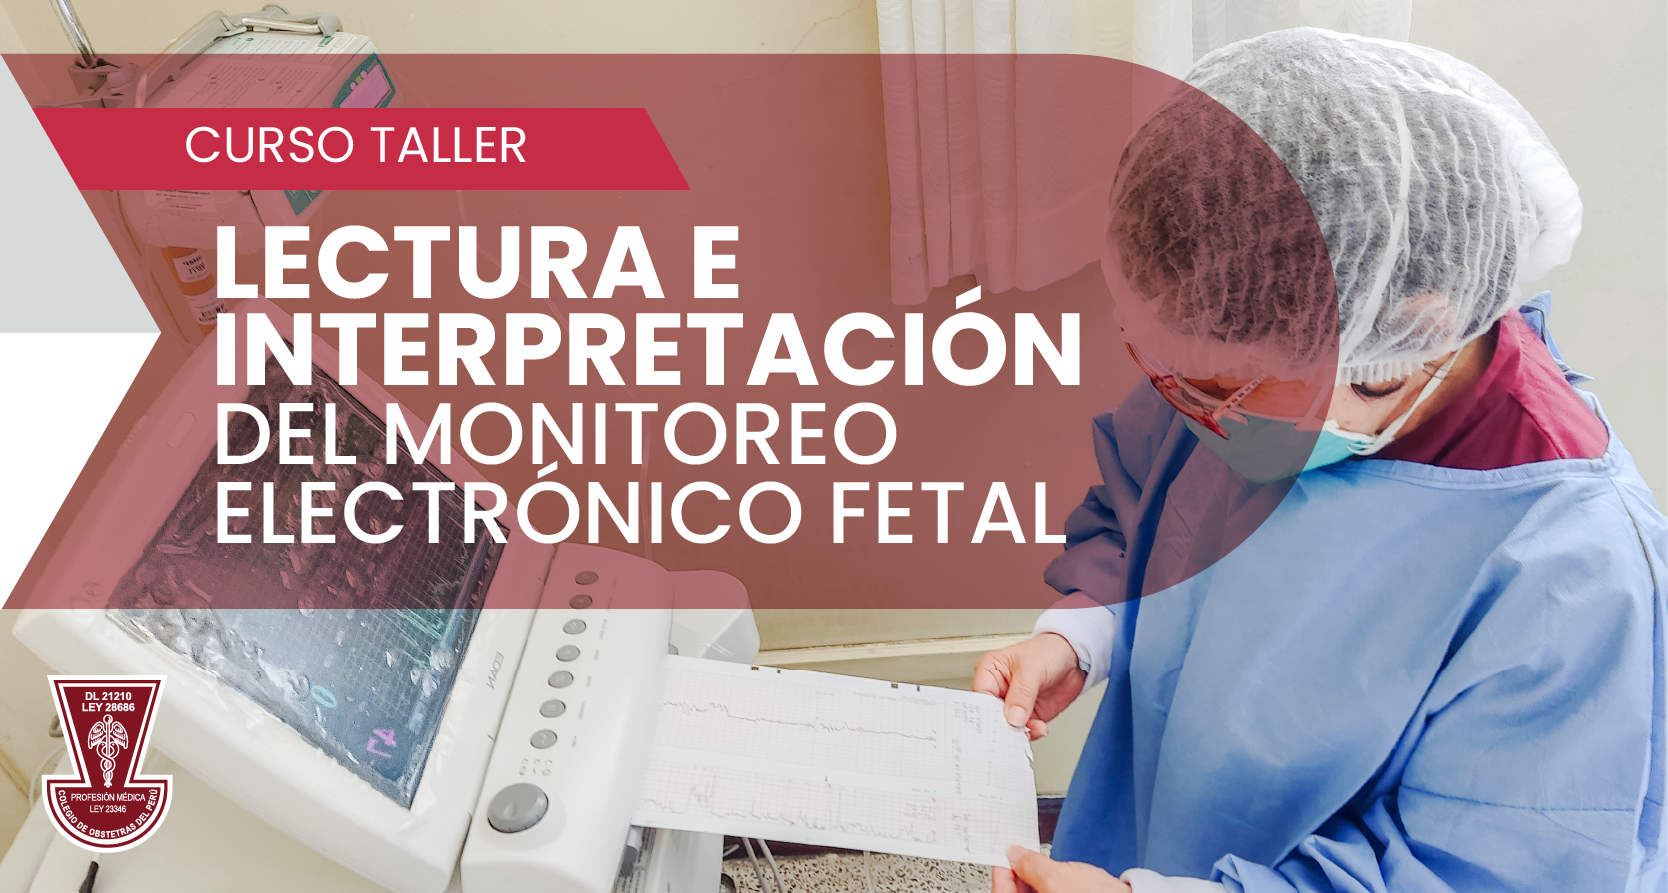 CURSO TALLER “Lectura e Interpretación del Monitoreo Electrónico Fetal”